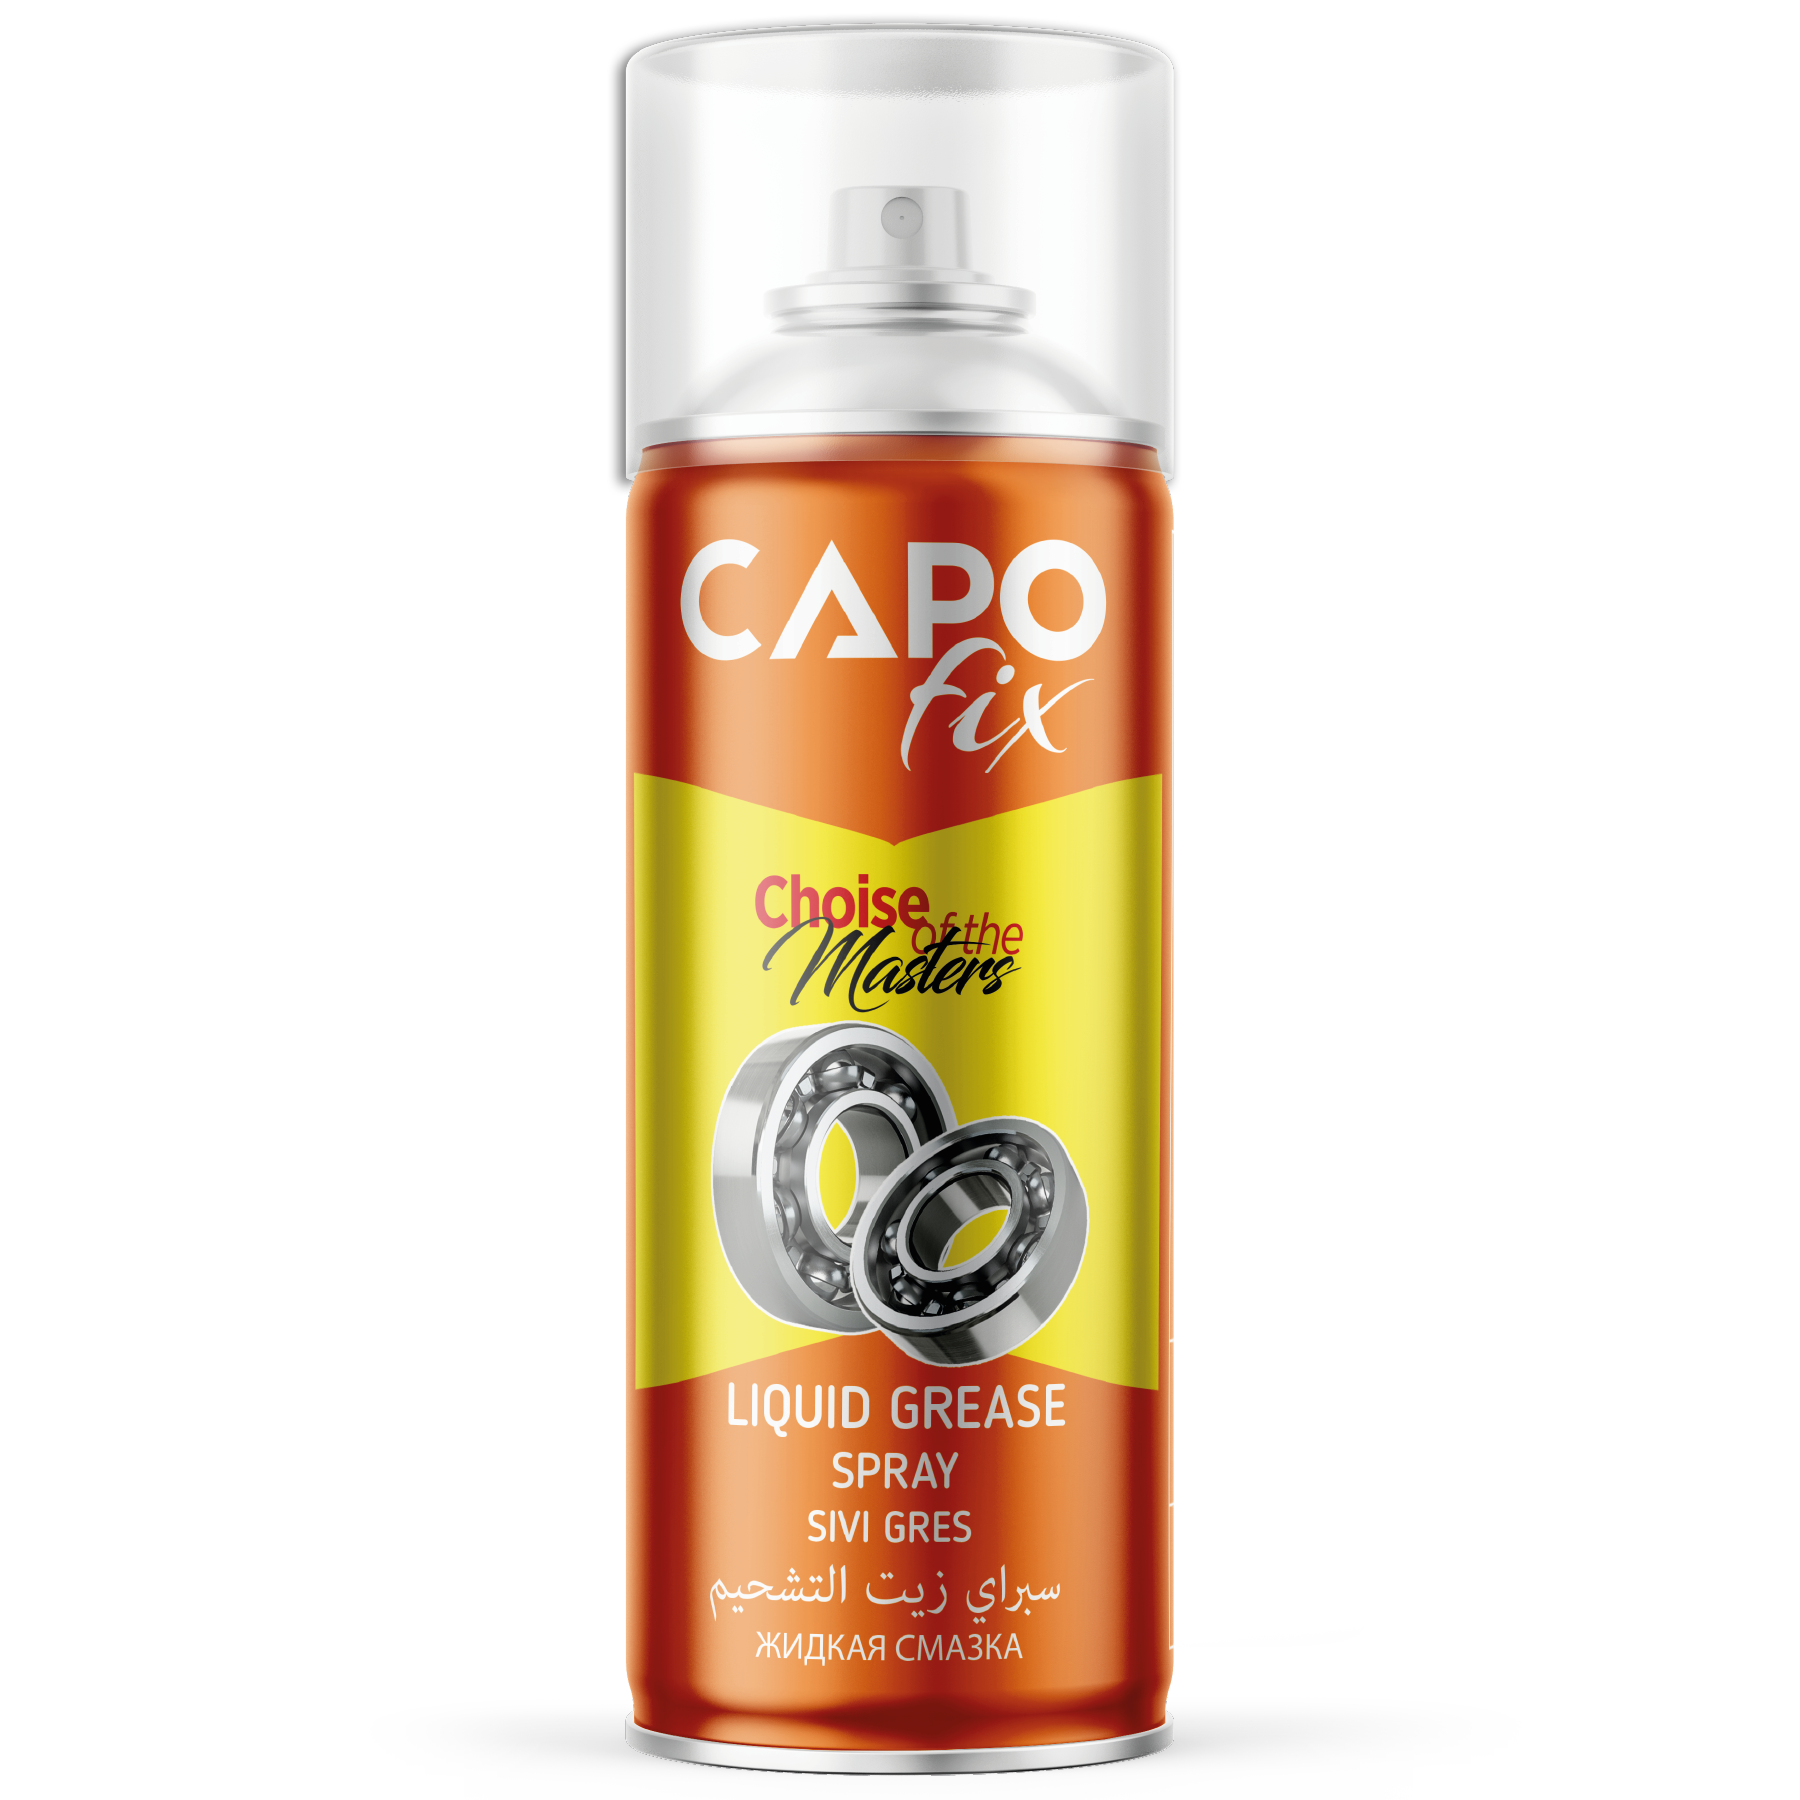 .CAPO fix Liquid Grease Spray.